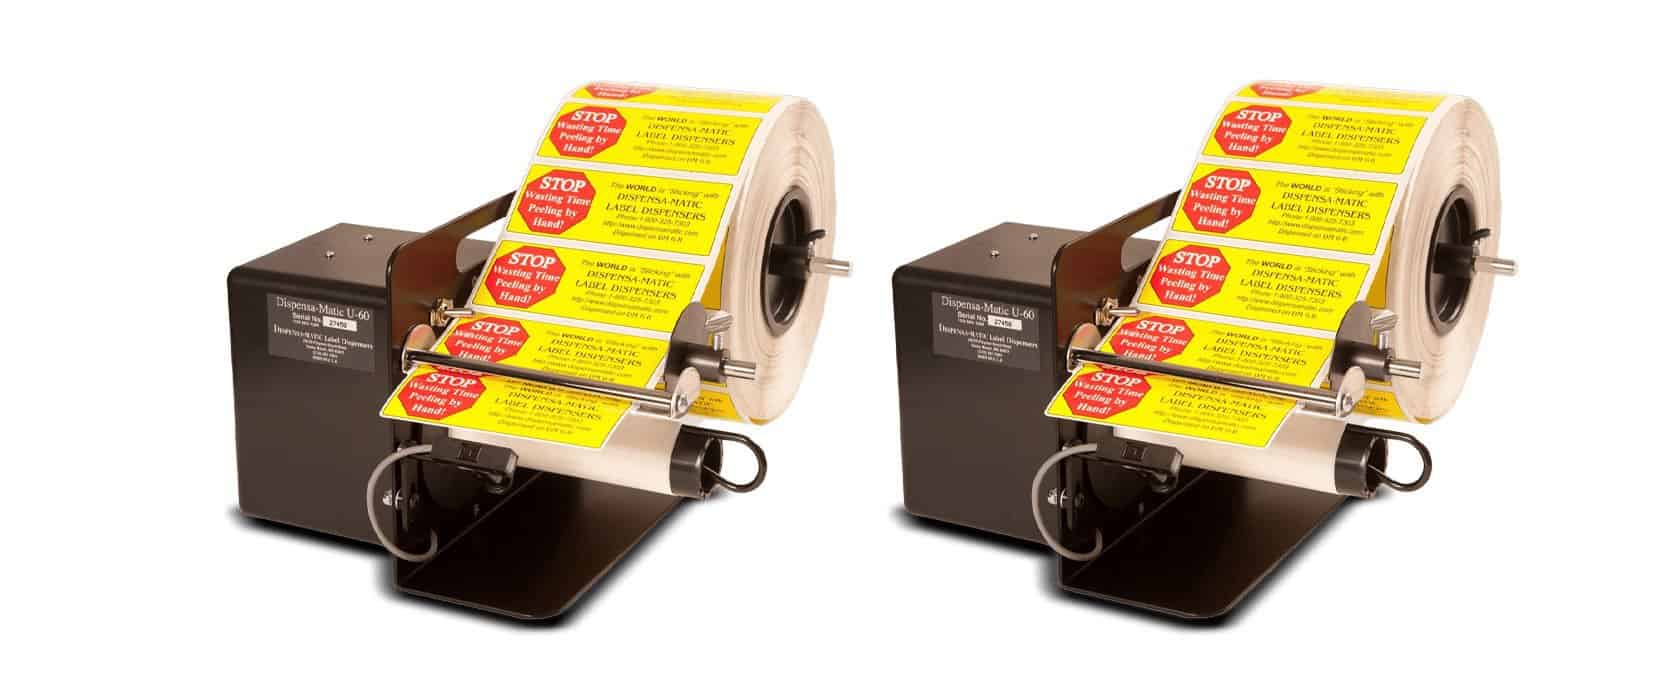 Semi-automatic Adhesive Tape Dispenser